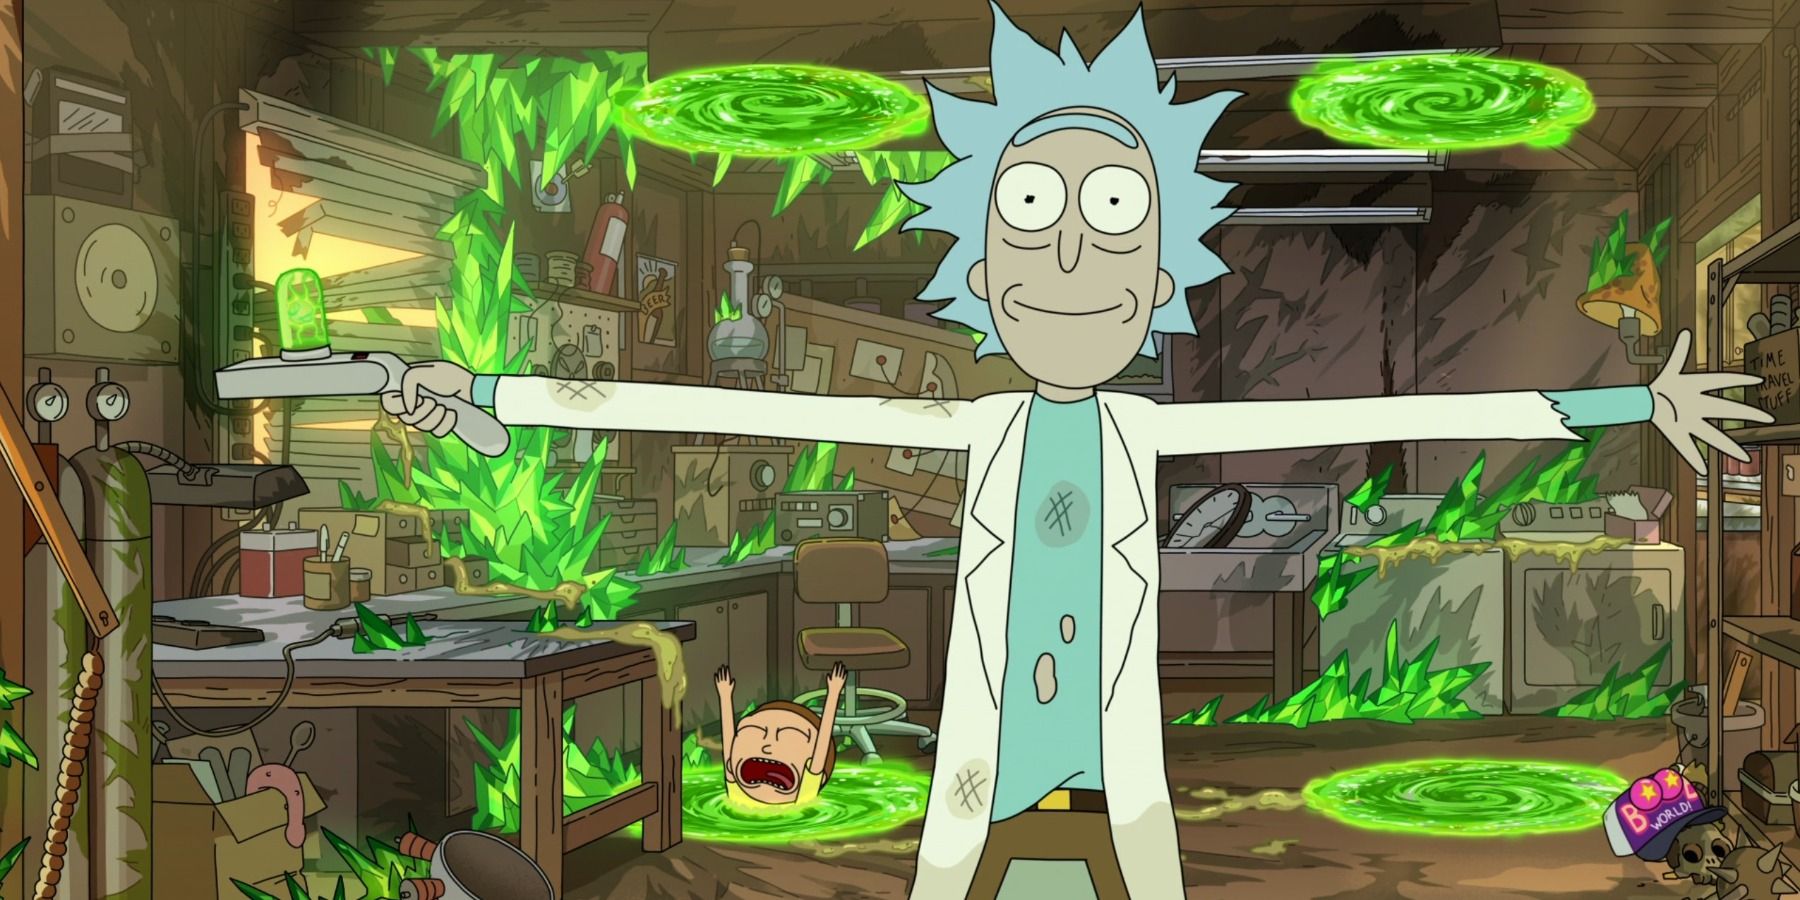 Rick and Morty season 6 portals in garage